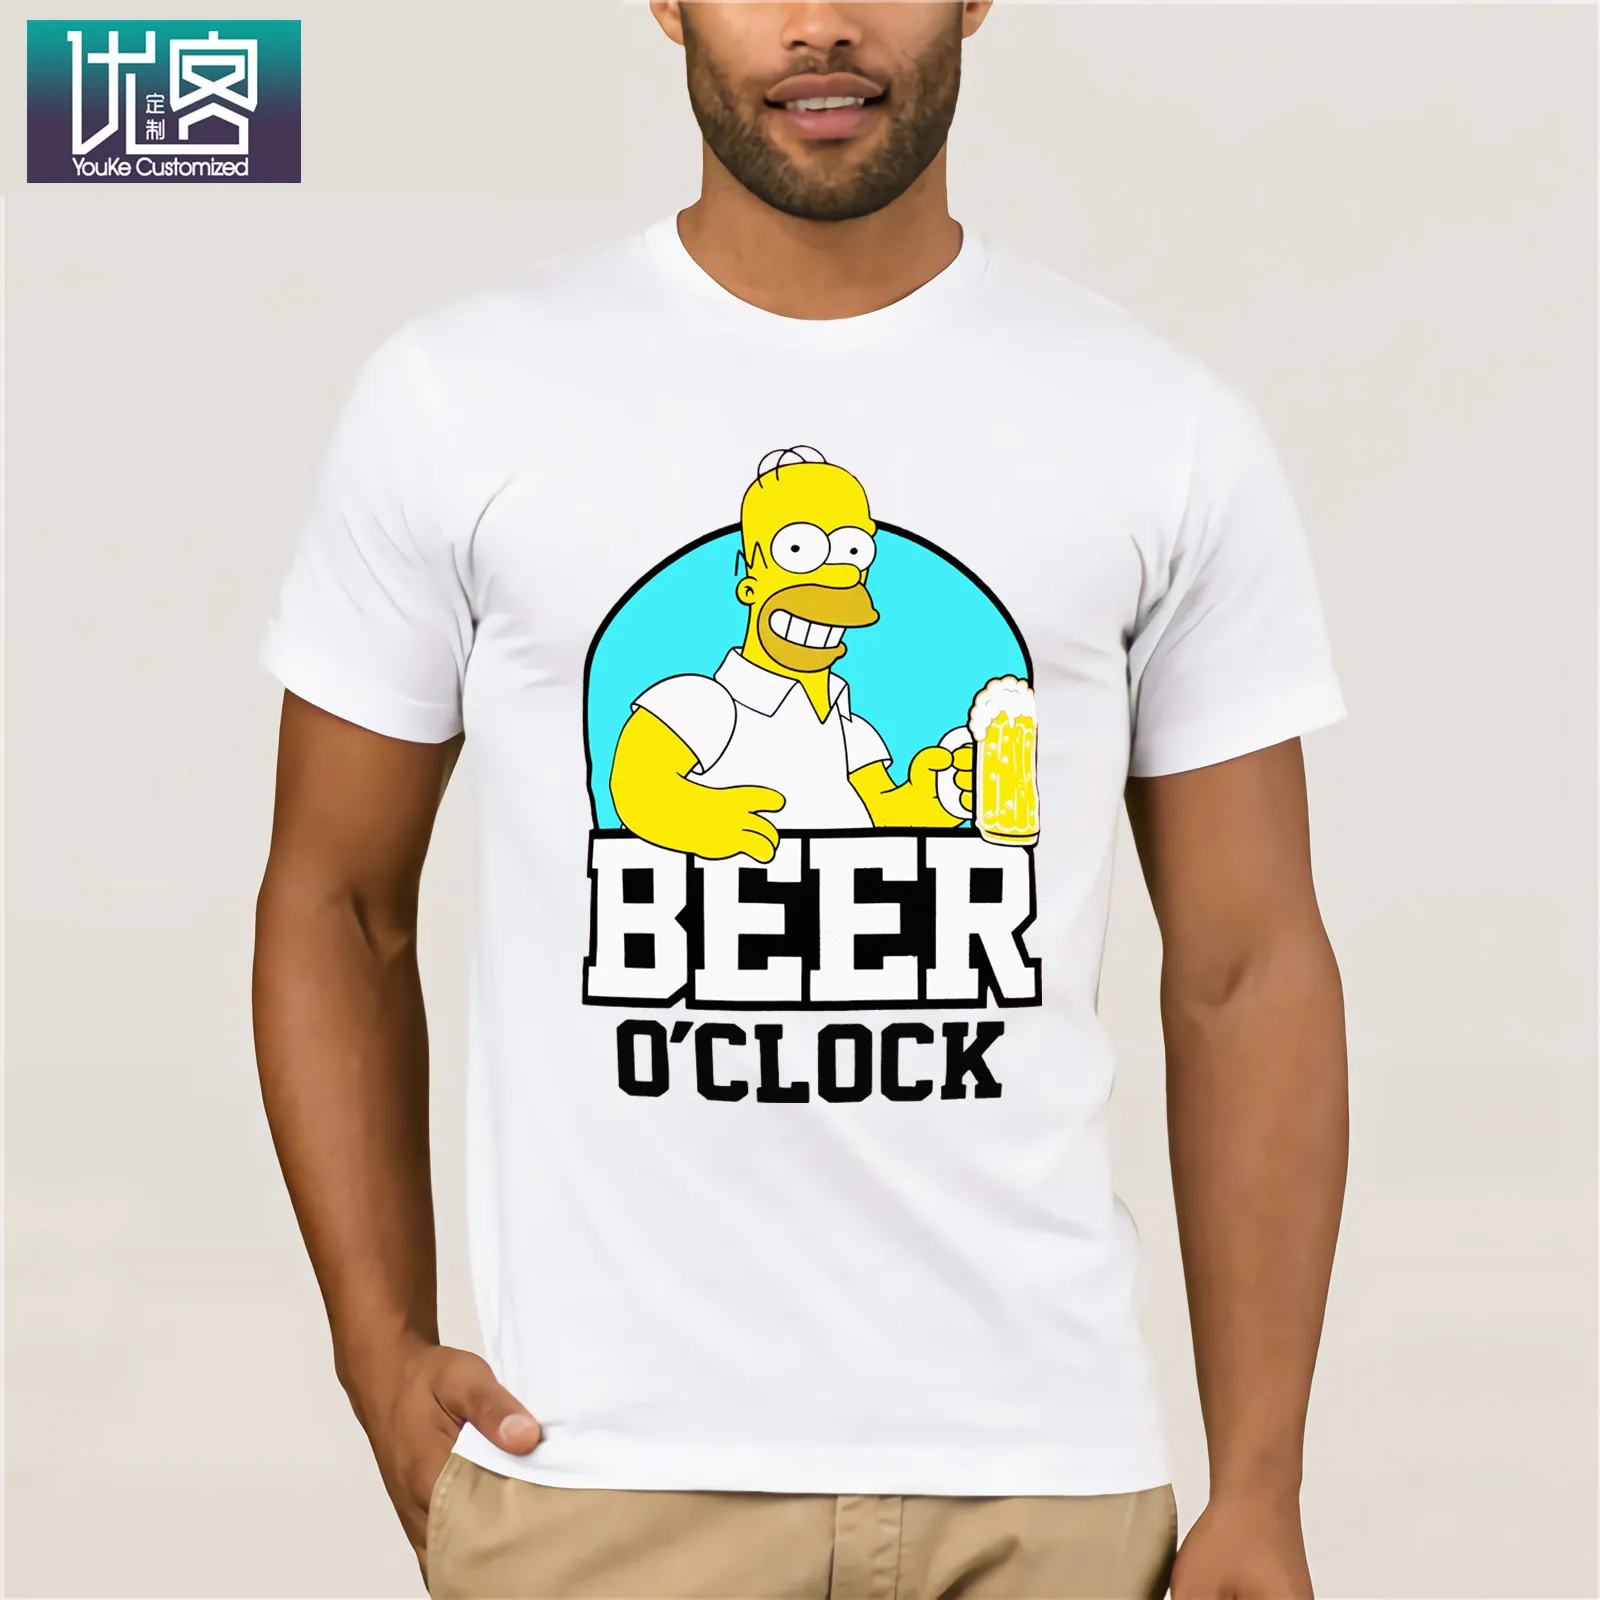 The Simpsons-BEER Clock-Homer Simpson, Мужская футболка, красные размеры, S-XXL, Забавные футболки, хлопковые топы, футболка, винтажный вырез лодочкой - Цвет: white